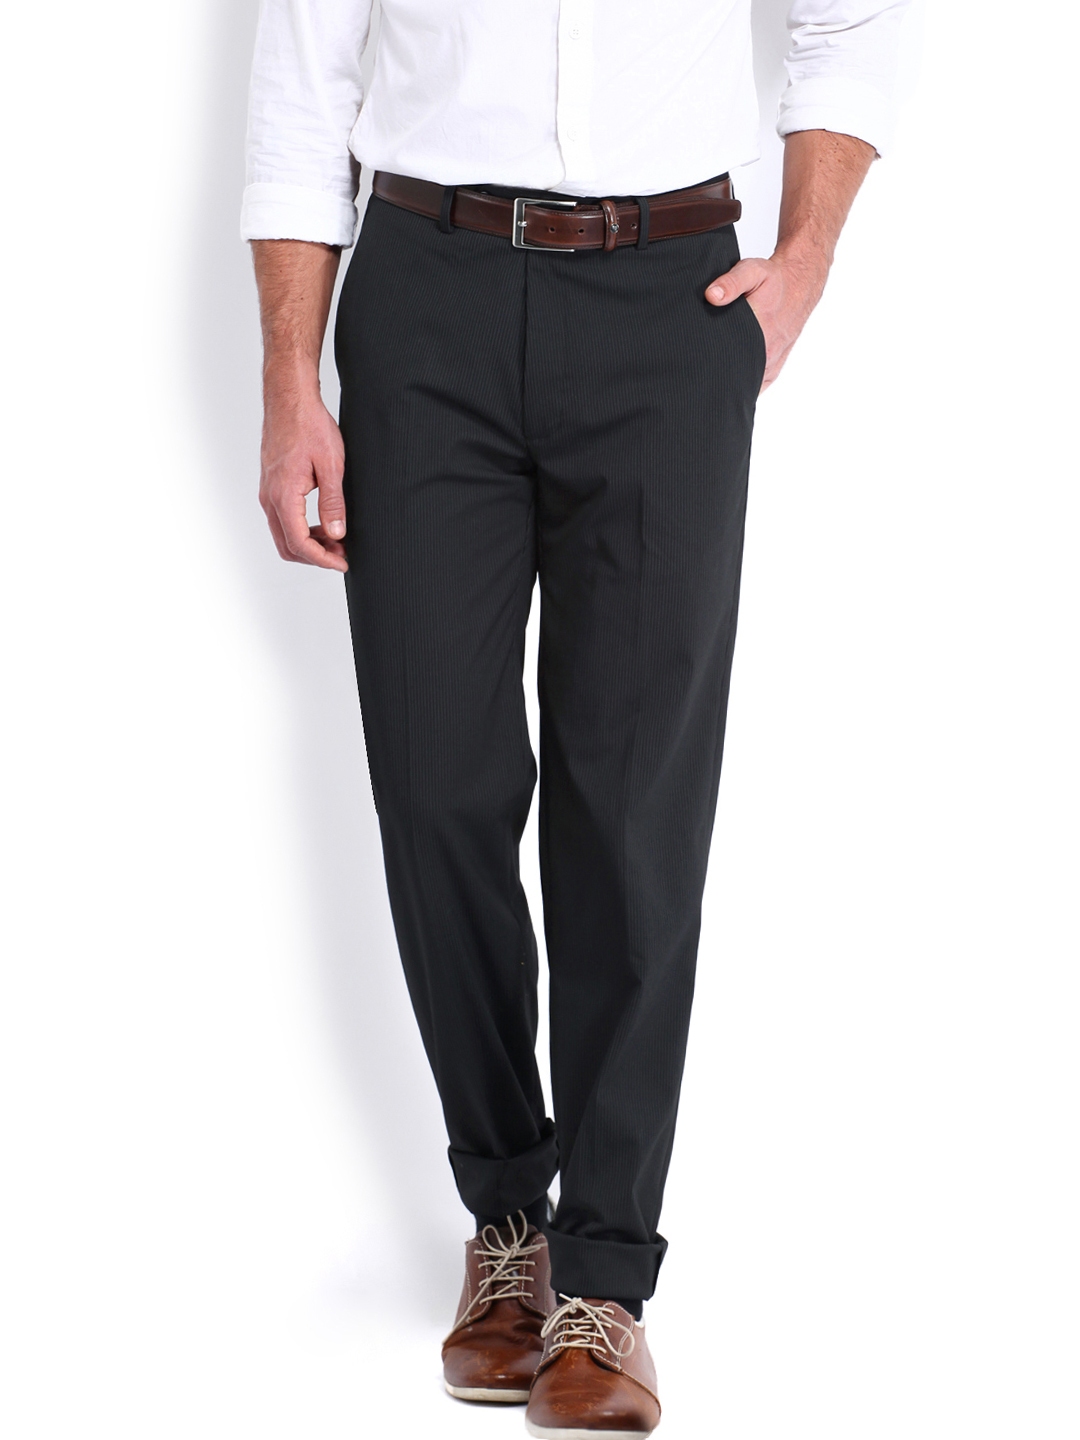 US Polo Association Mens Straight Fit Formal Trousers UFTR0136Grey 40W  x 36L  Amazonin Fashion